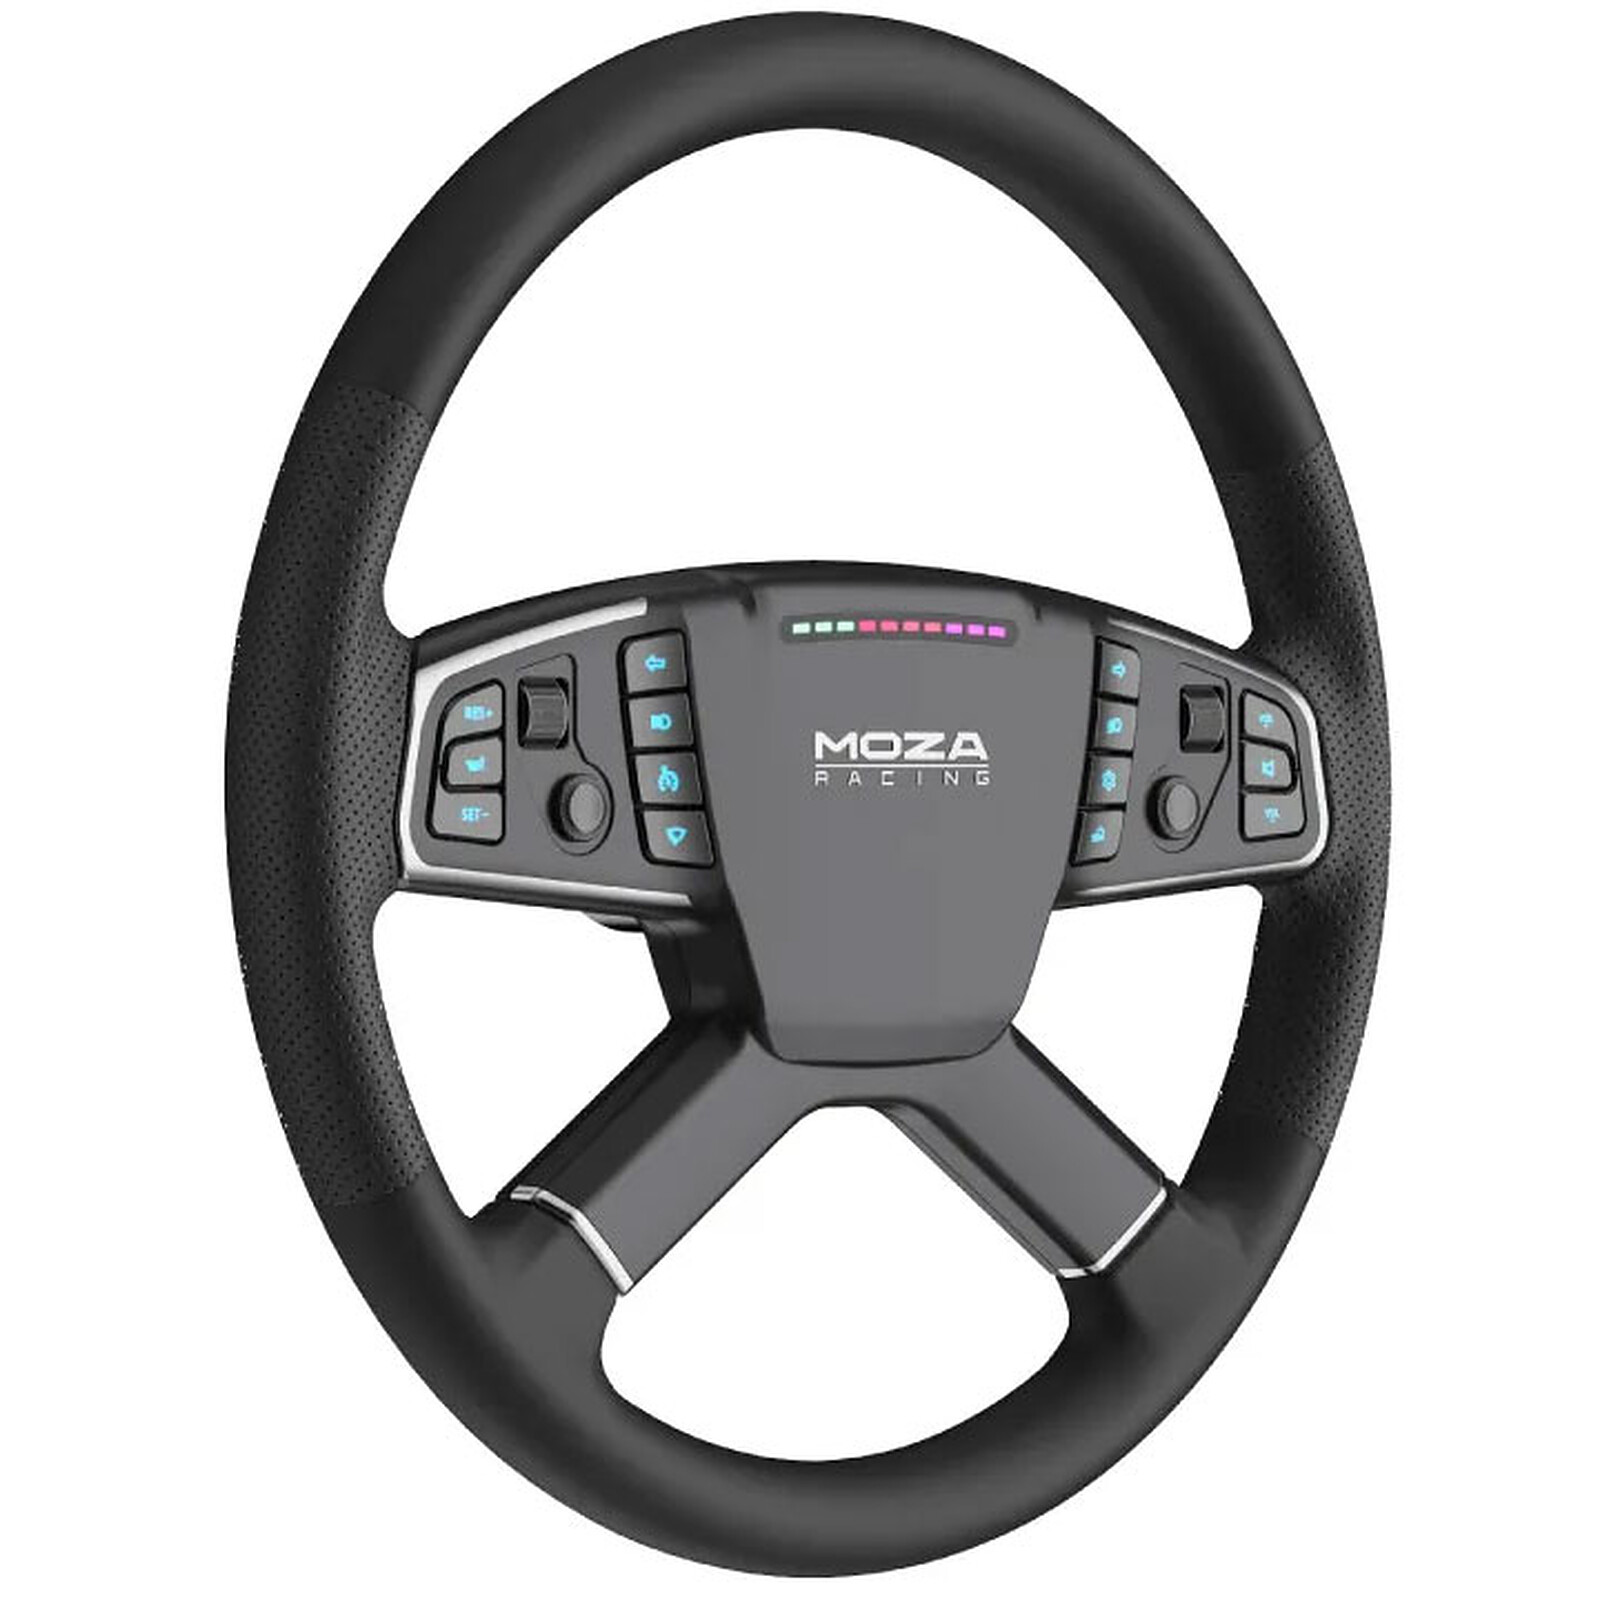 Moza Racing Truck Wheel - Périphérique de jeu - Cybertek.fr - 1